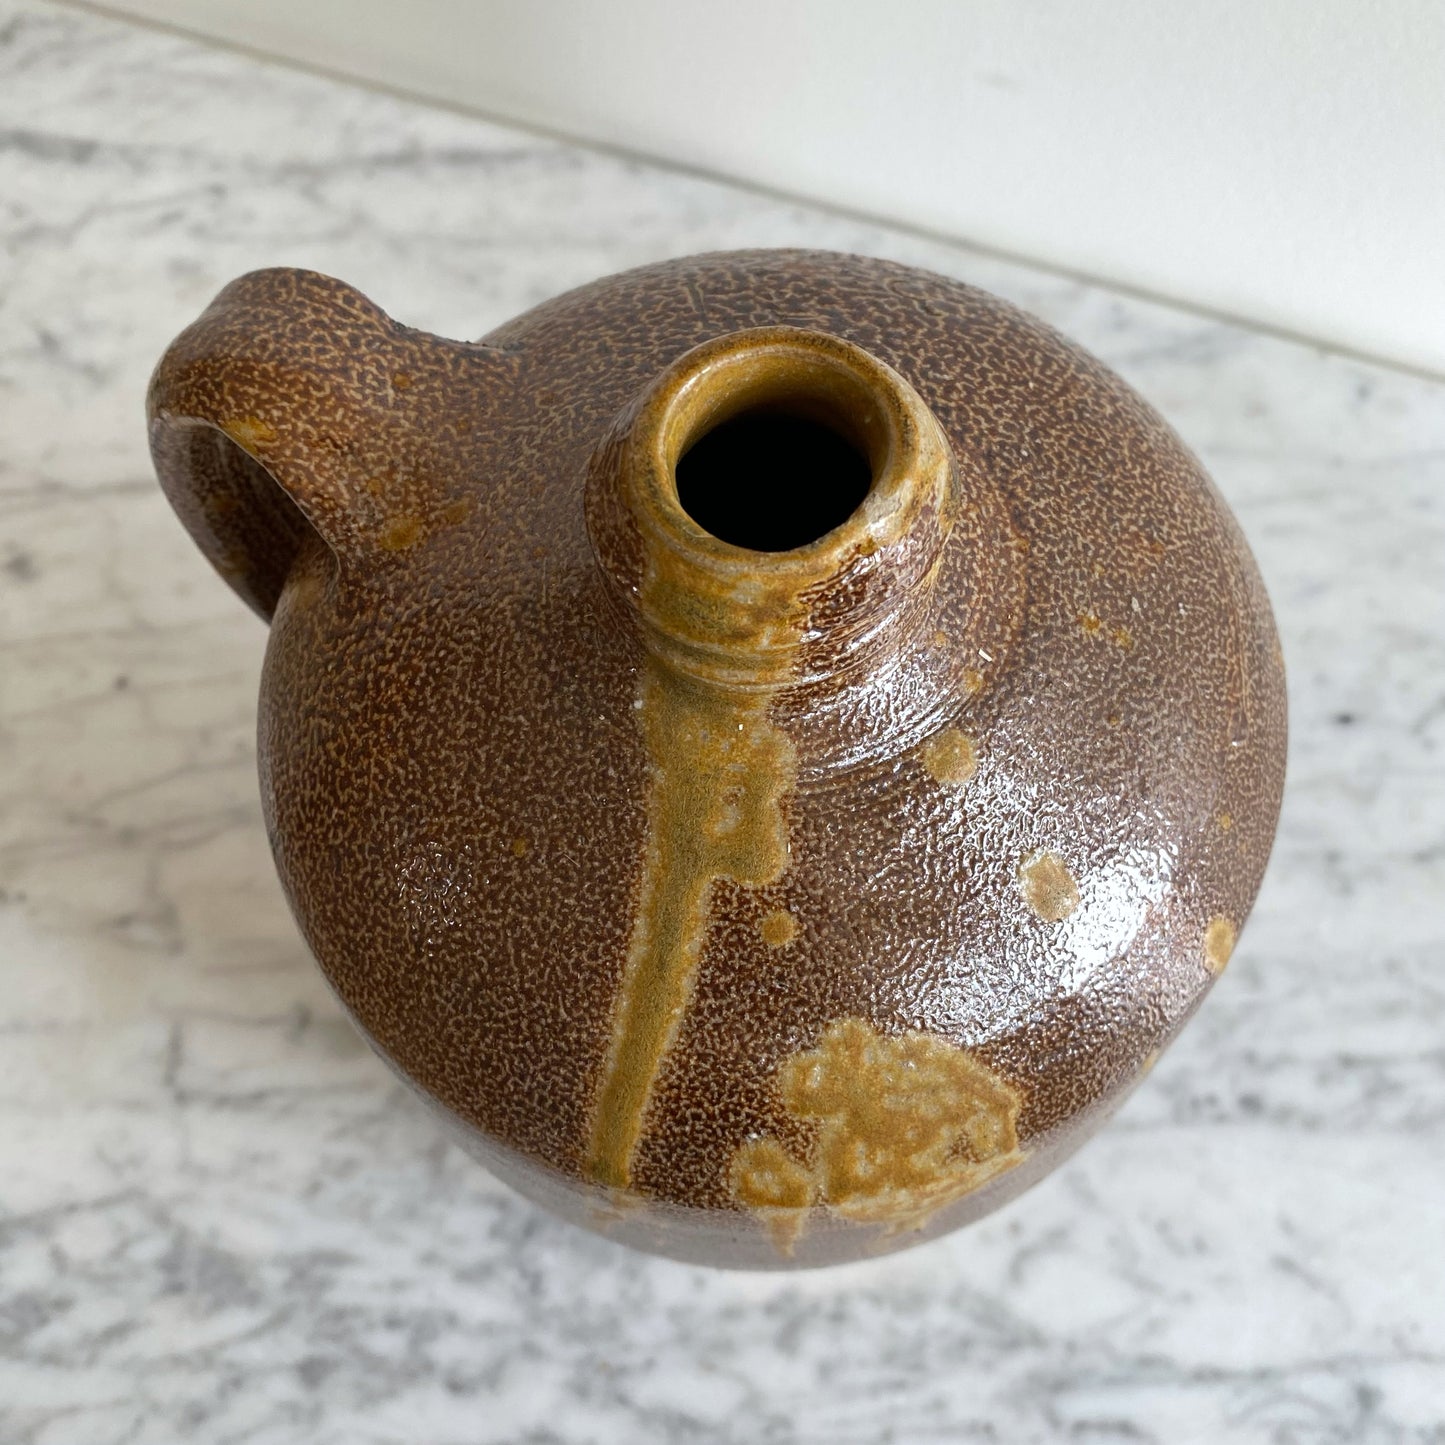 Antique Salt Glaze Stoneware Jug, 10.25”